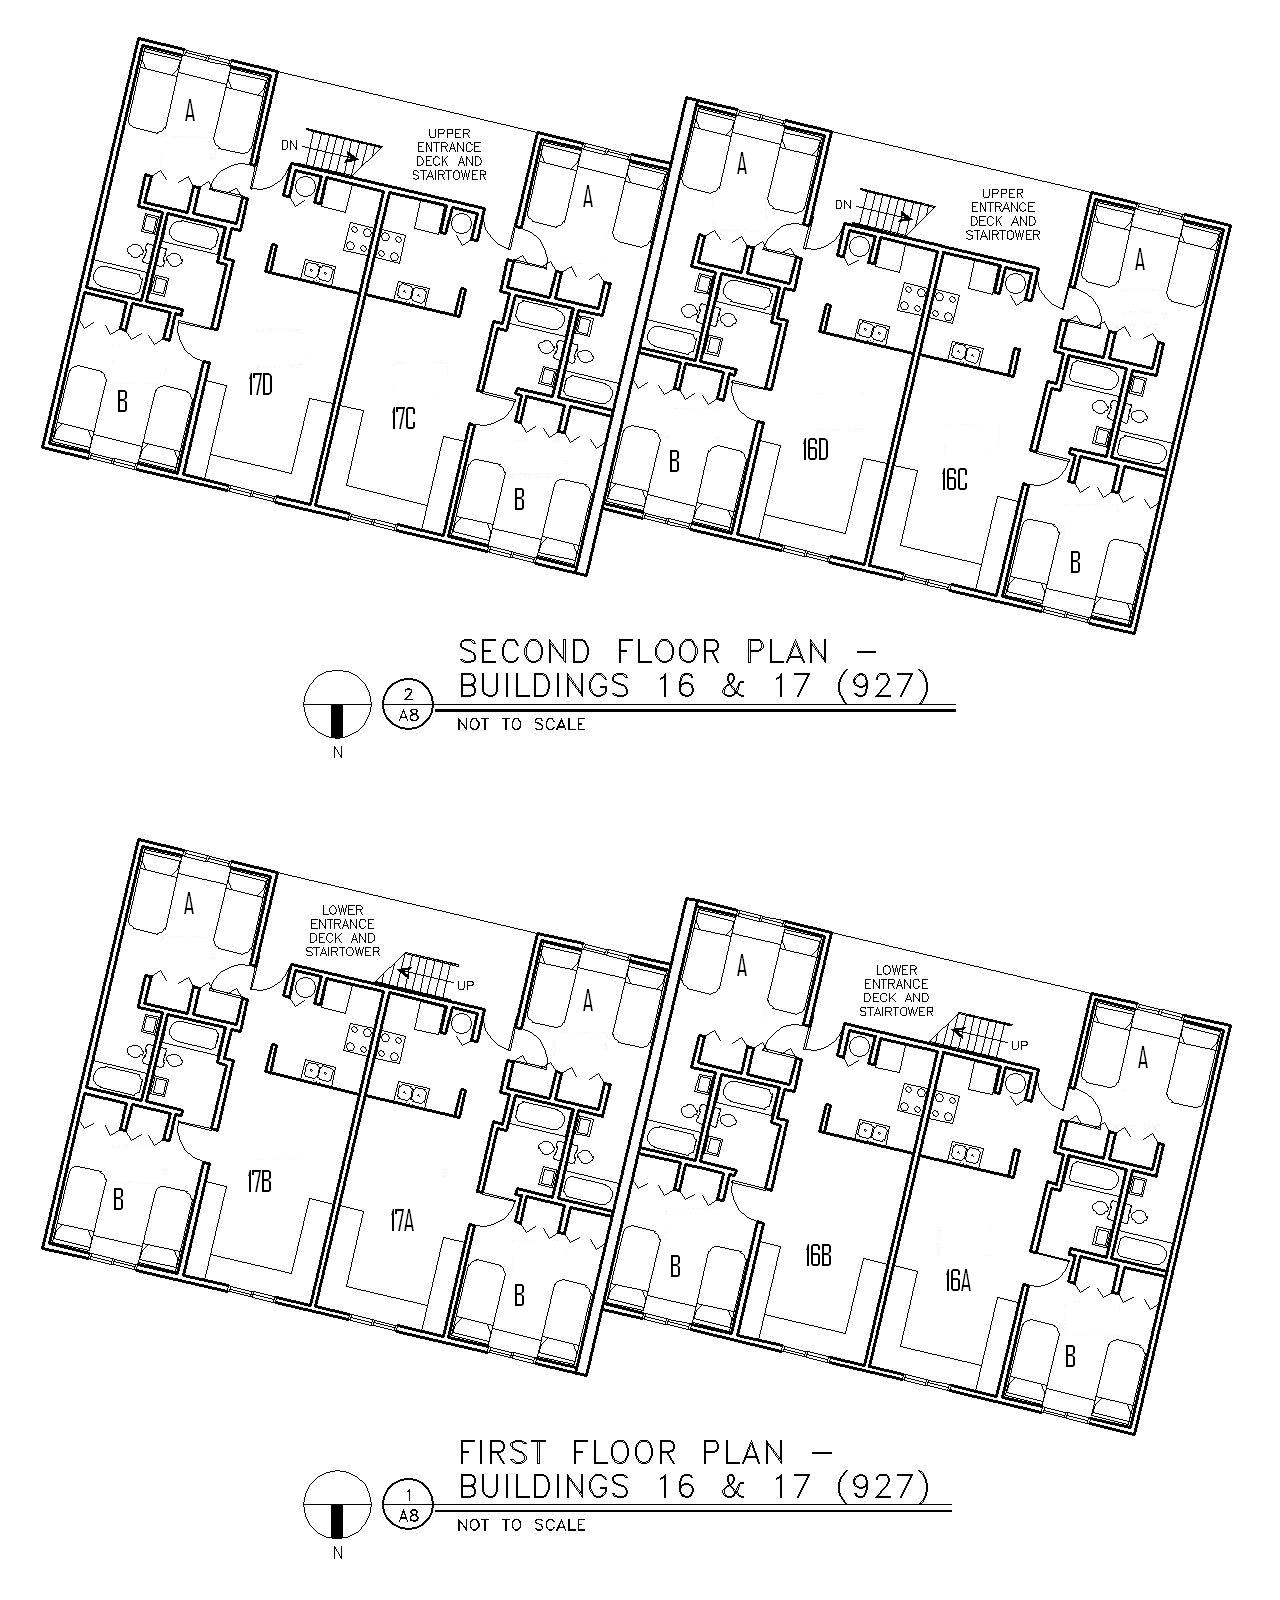 Floor Plan for Buildings 16 & 17